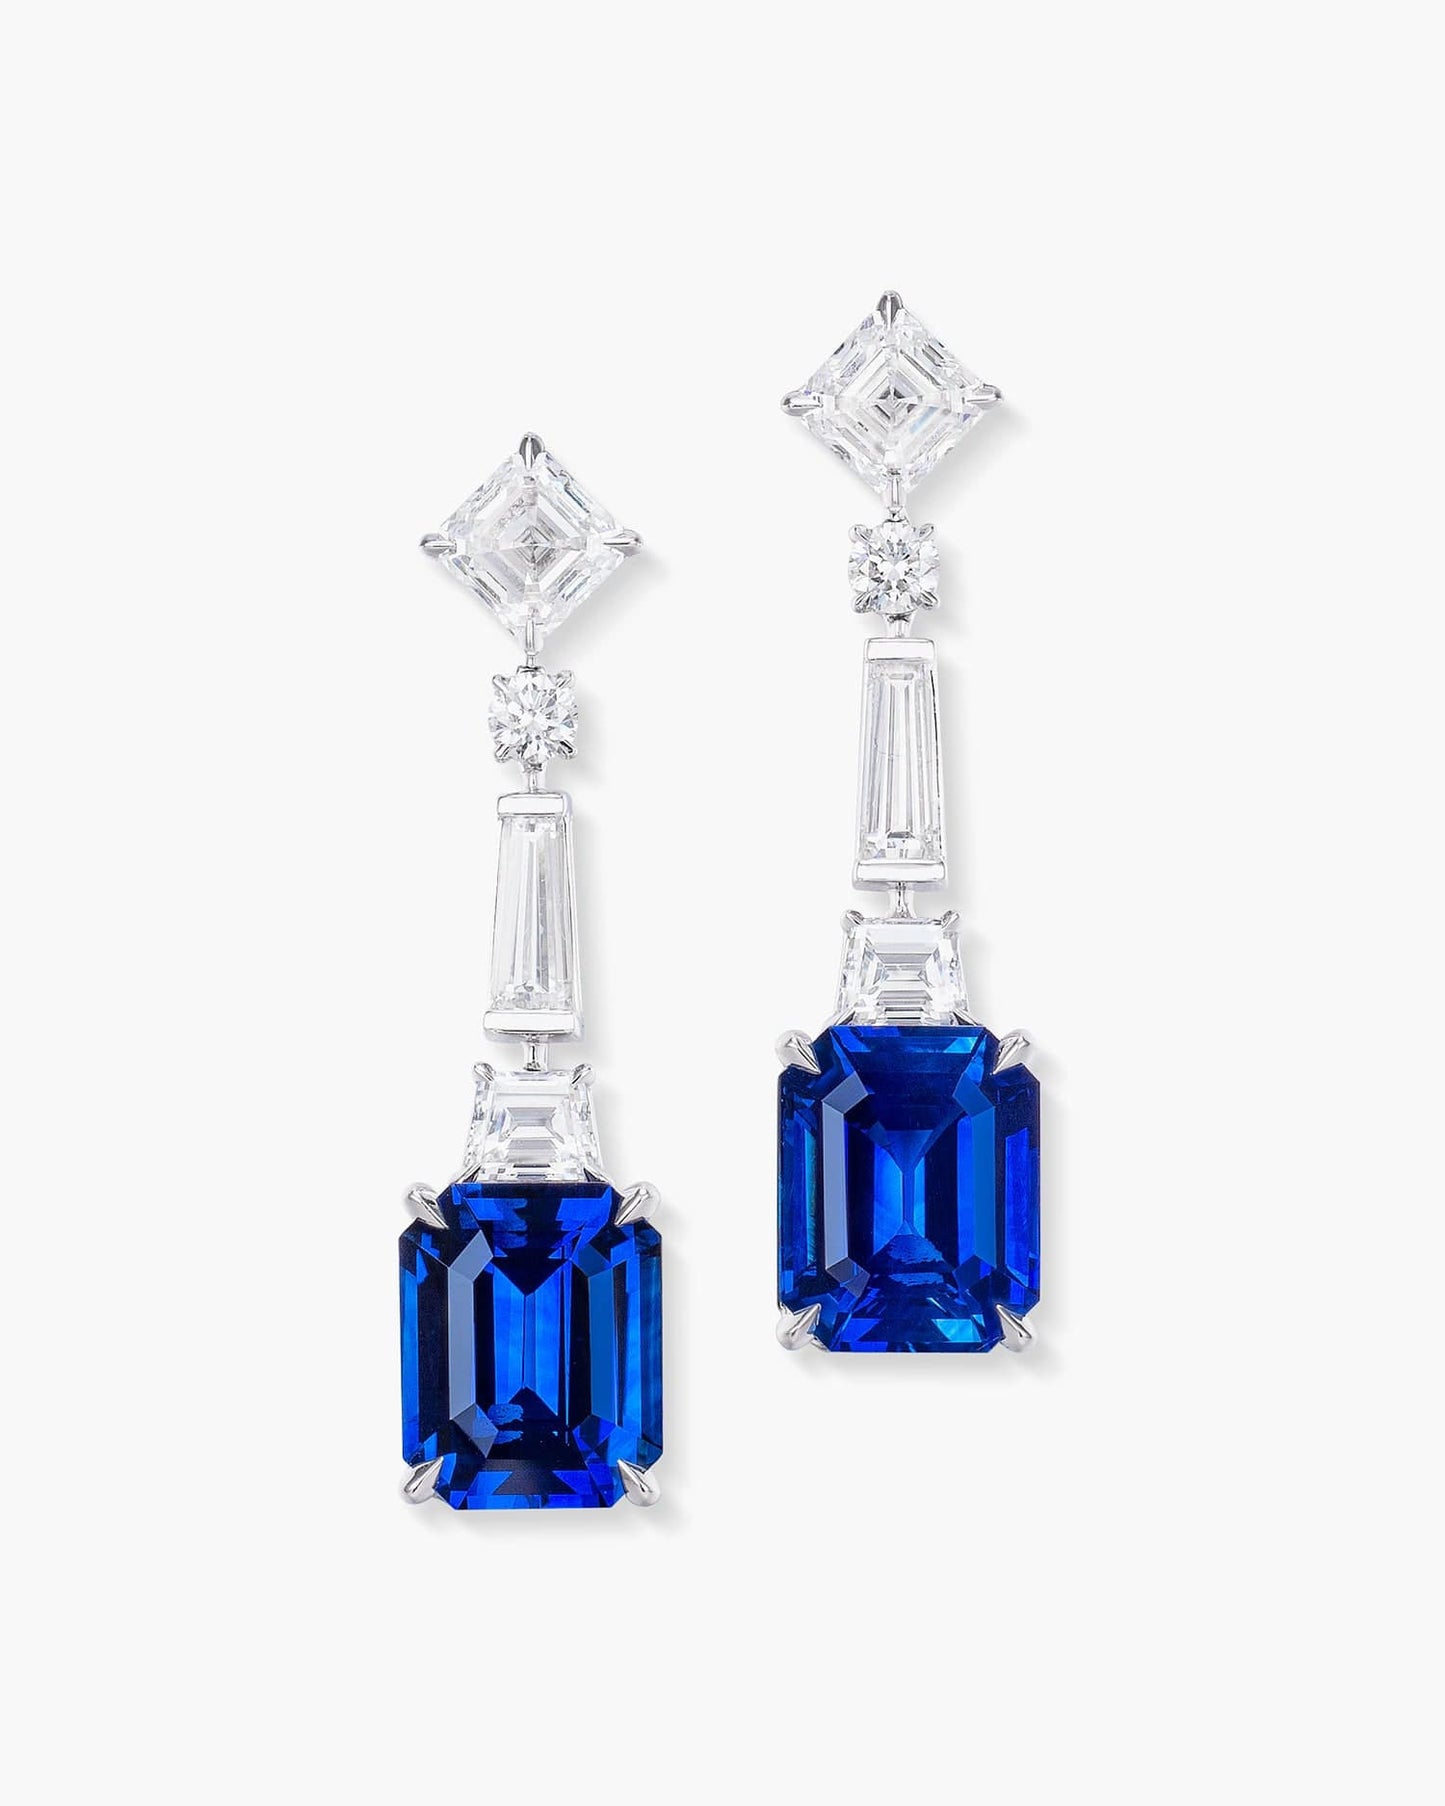 7.77 carat Emerald Cut Sapphire and Diamond Earrings